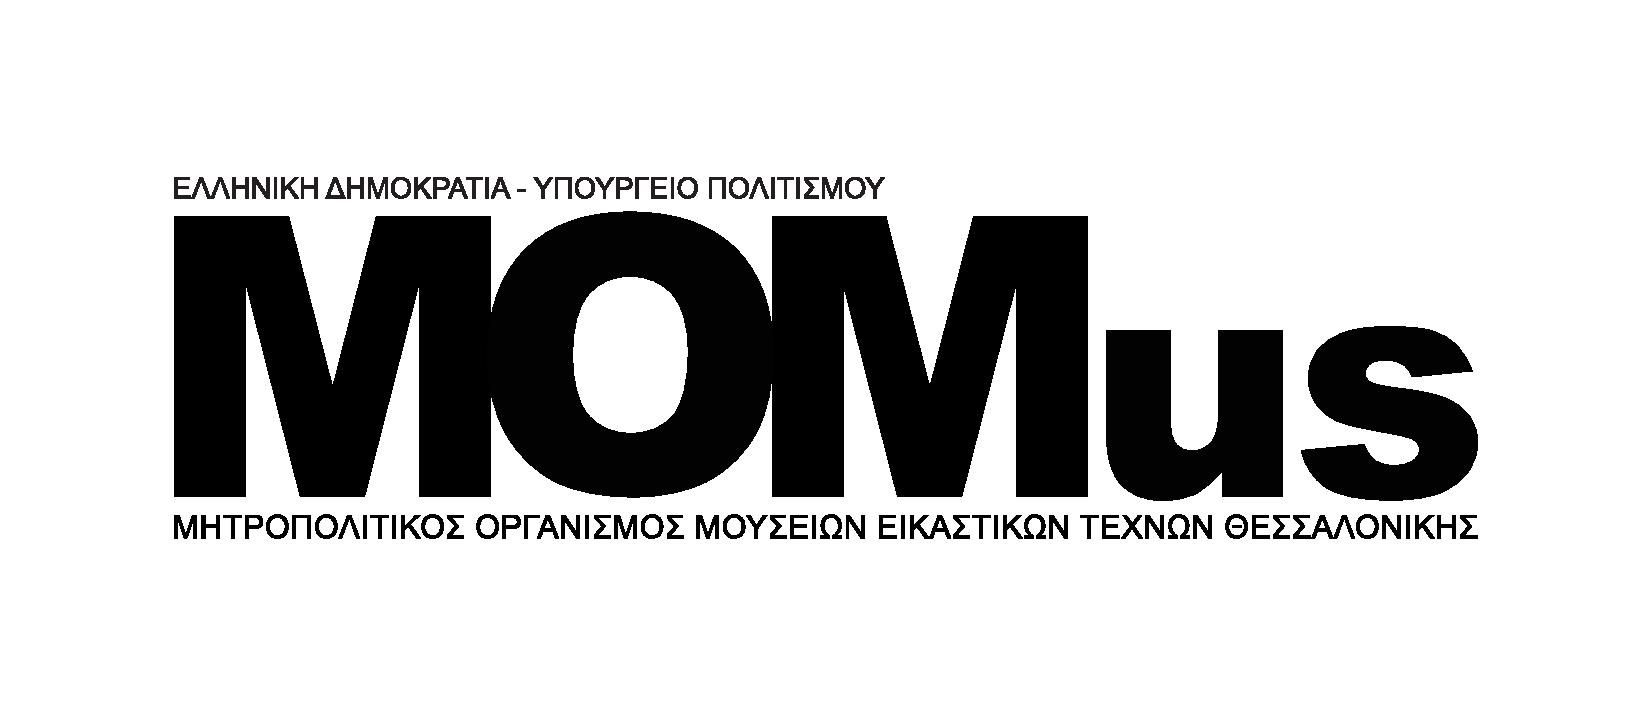 Metropolitan Organization of Museums of Visual Arts of Thessaloniki (MOMus)